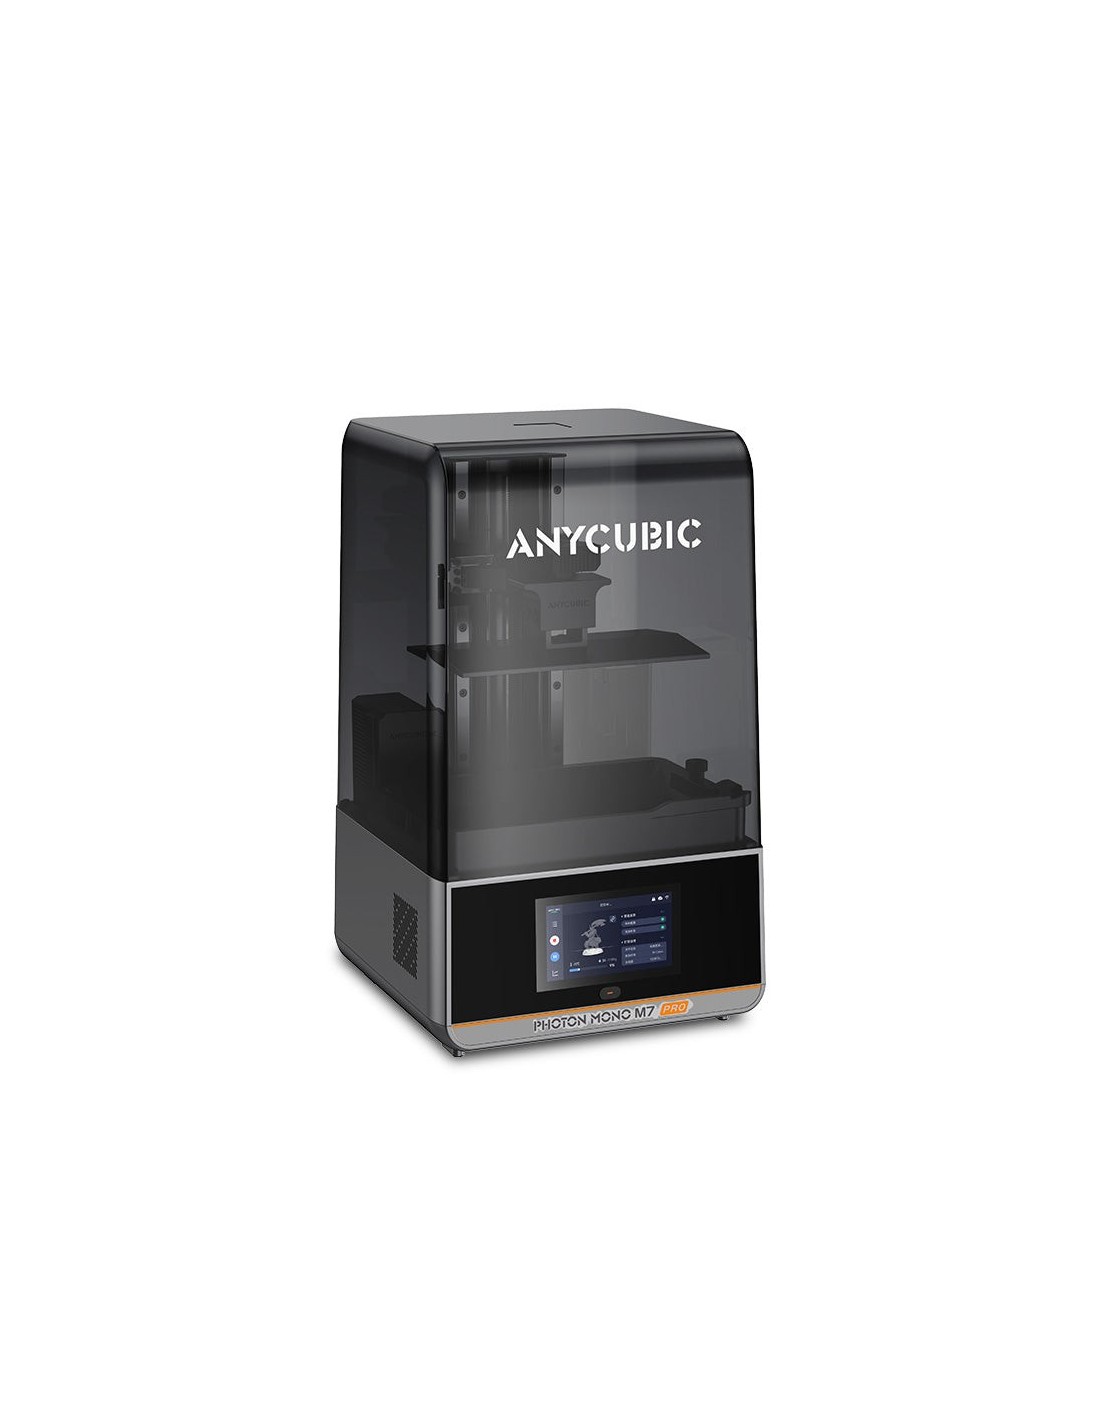 Anycubic Photon Mono M7 Pro - 3D-printer